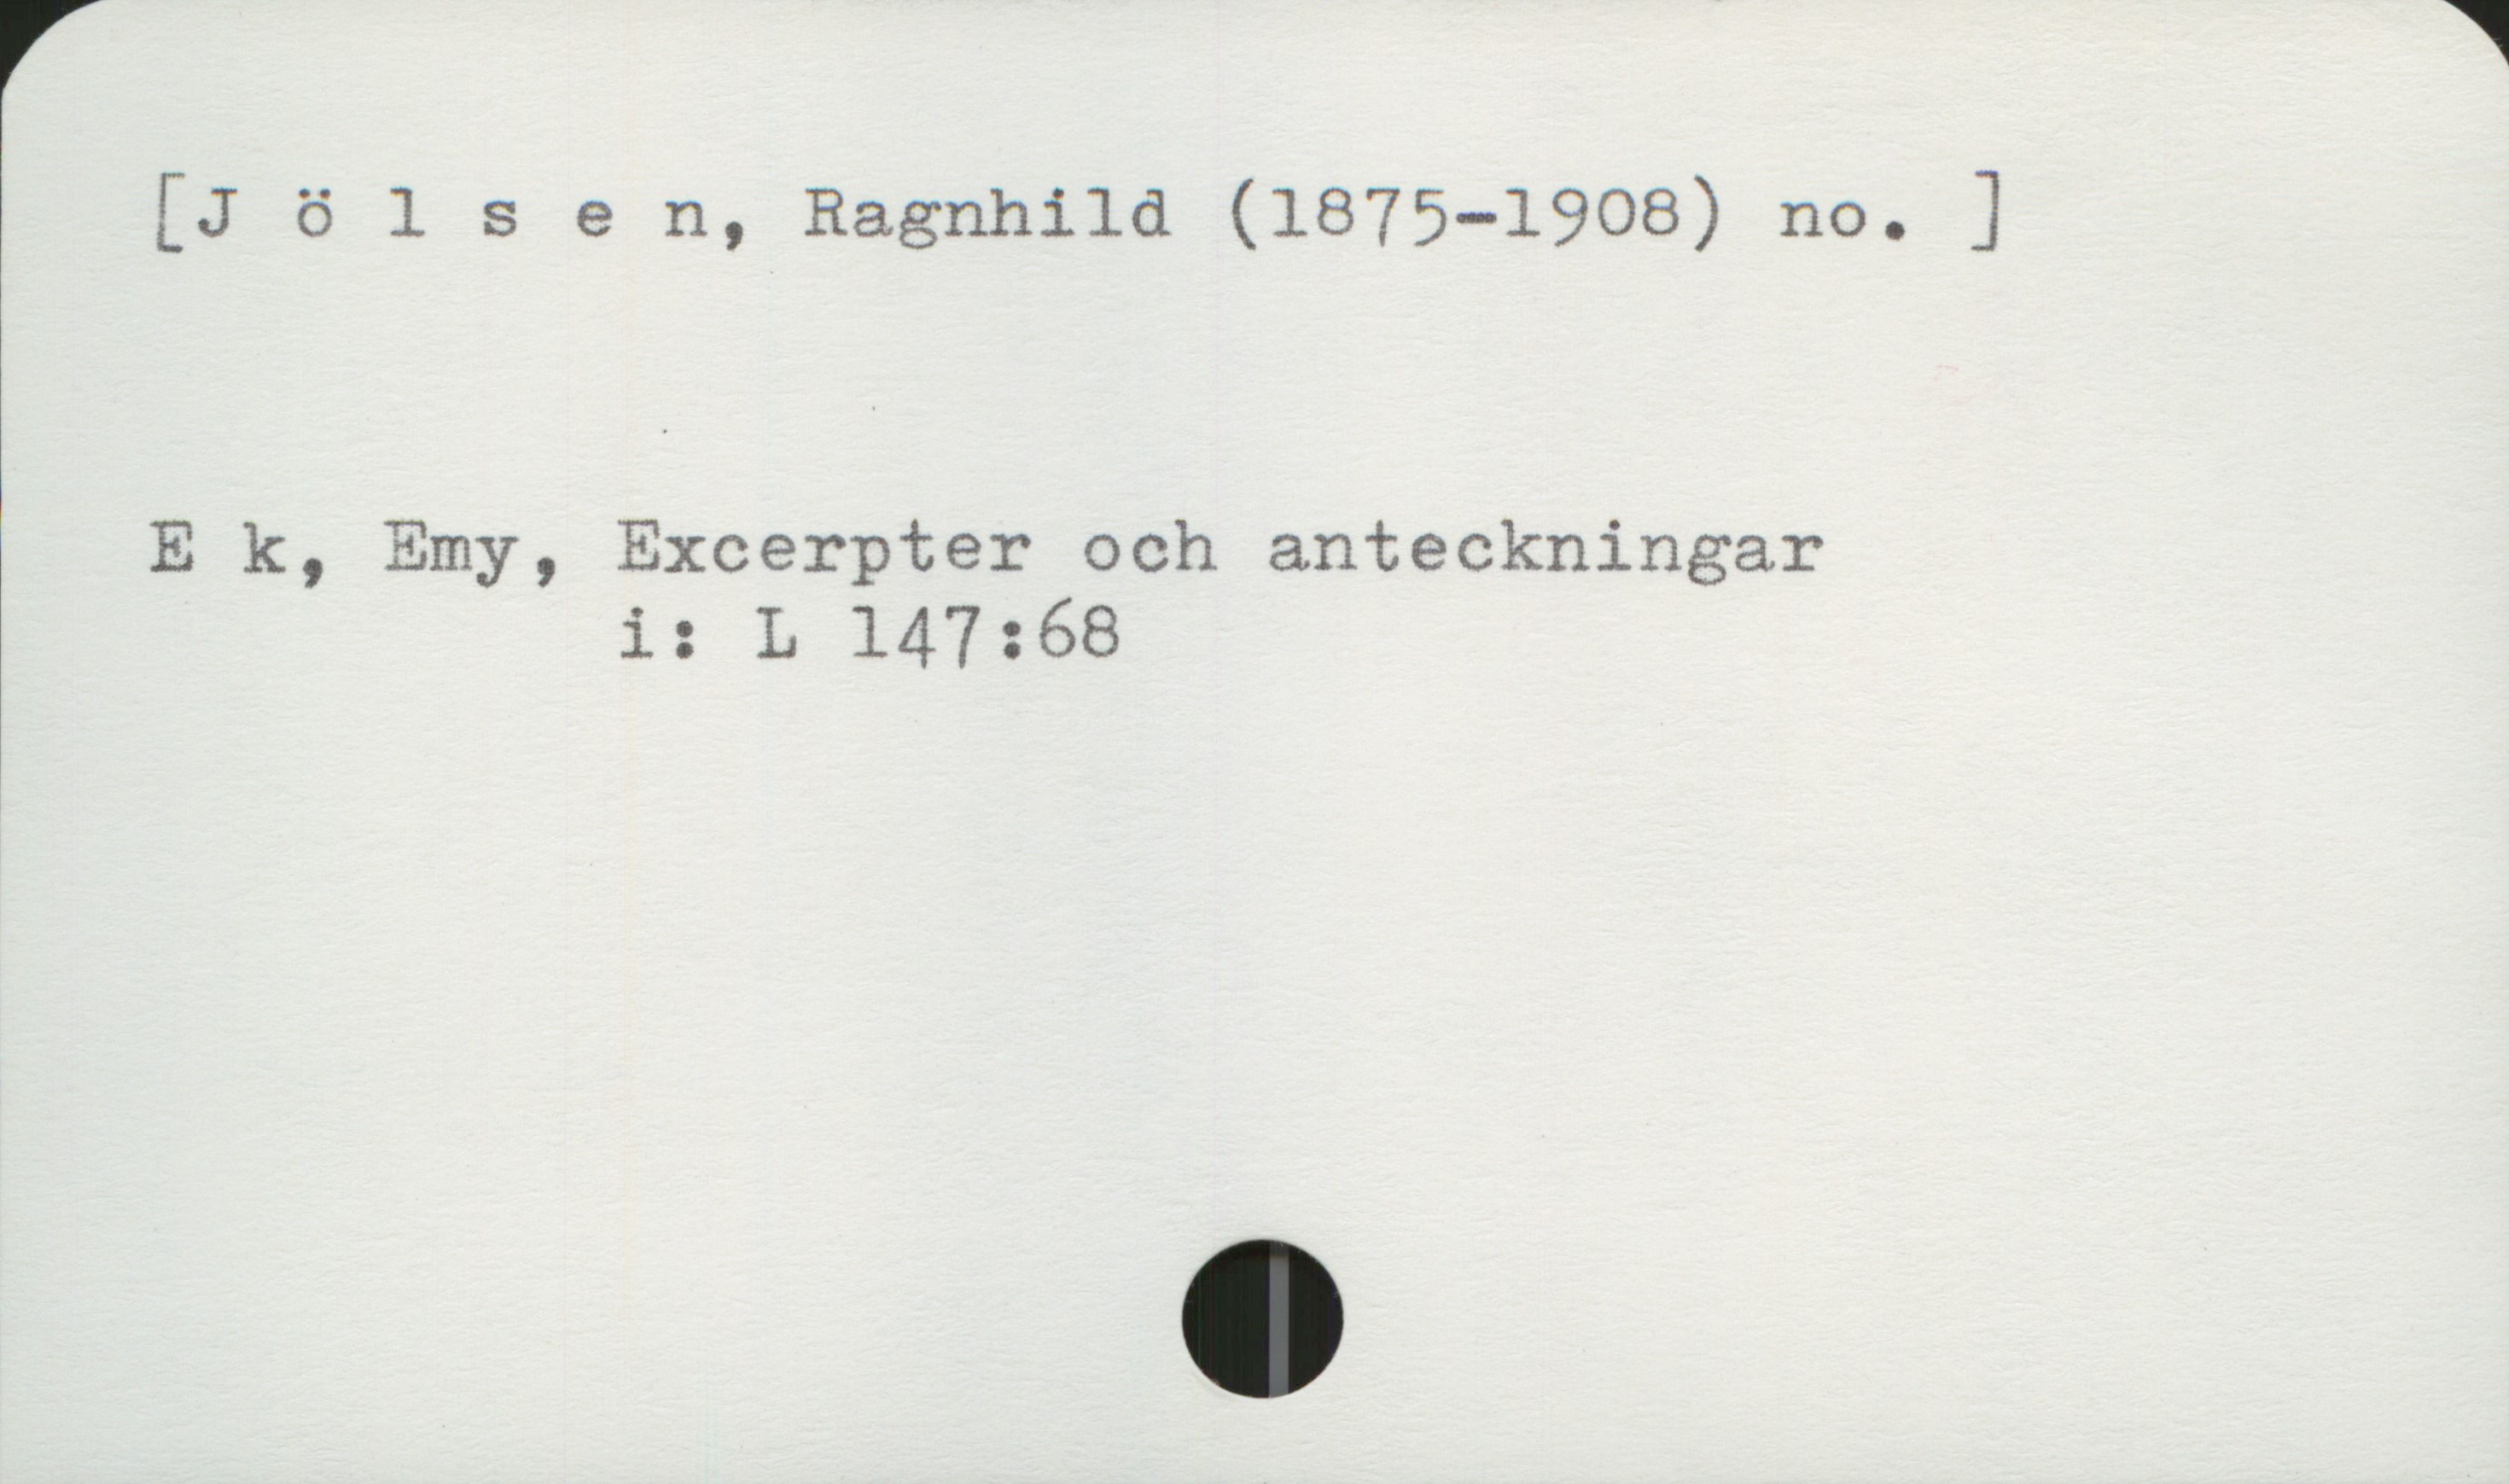 Jølsen, Ragnhild (1875-1908) [Jölsen, Ragnhild (1875-1908) no. ]


Ek, Emy,  Excerpter och anteckningar
                 i:  L 147:68